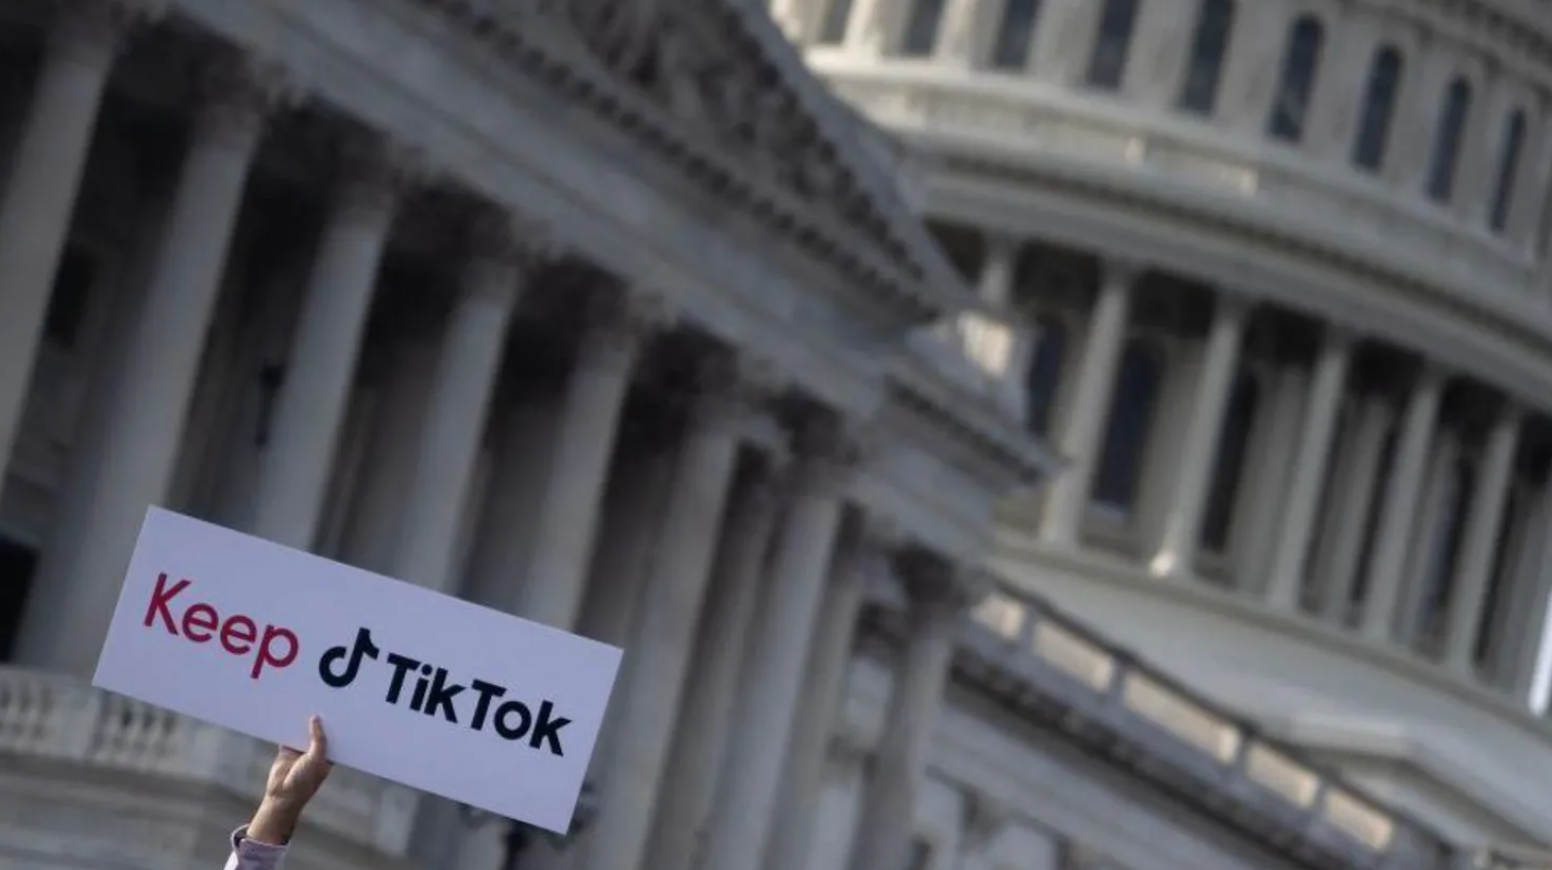 ▲TikTok支持者抗议国会禁令